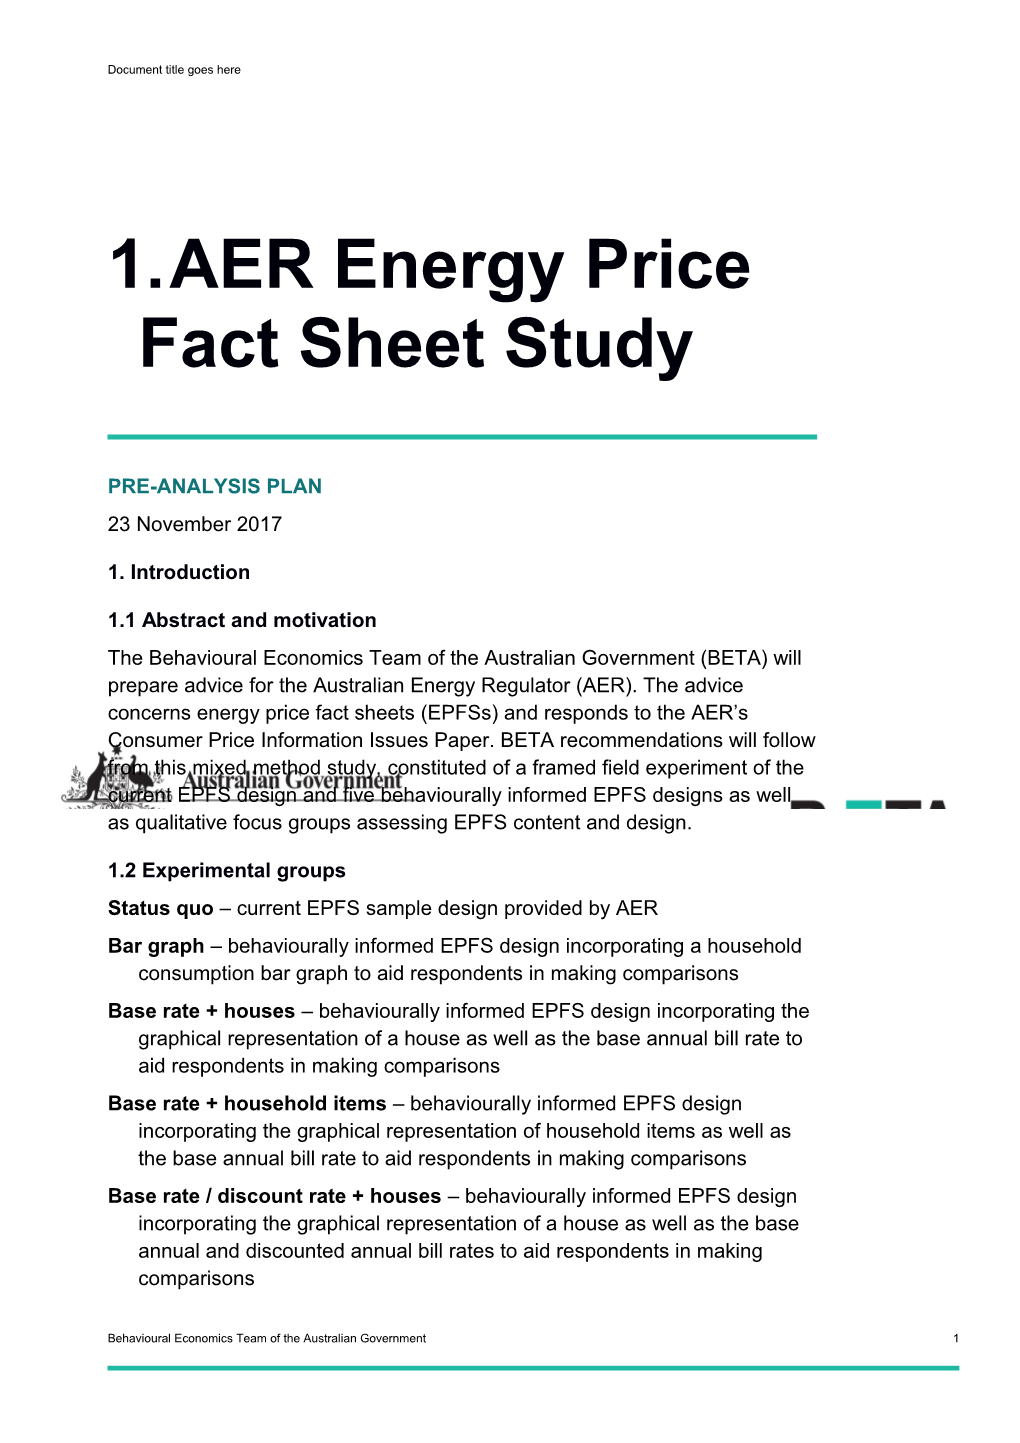 AER Energy Price Fact Sheet Study